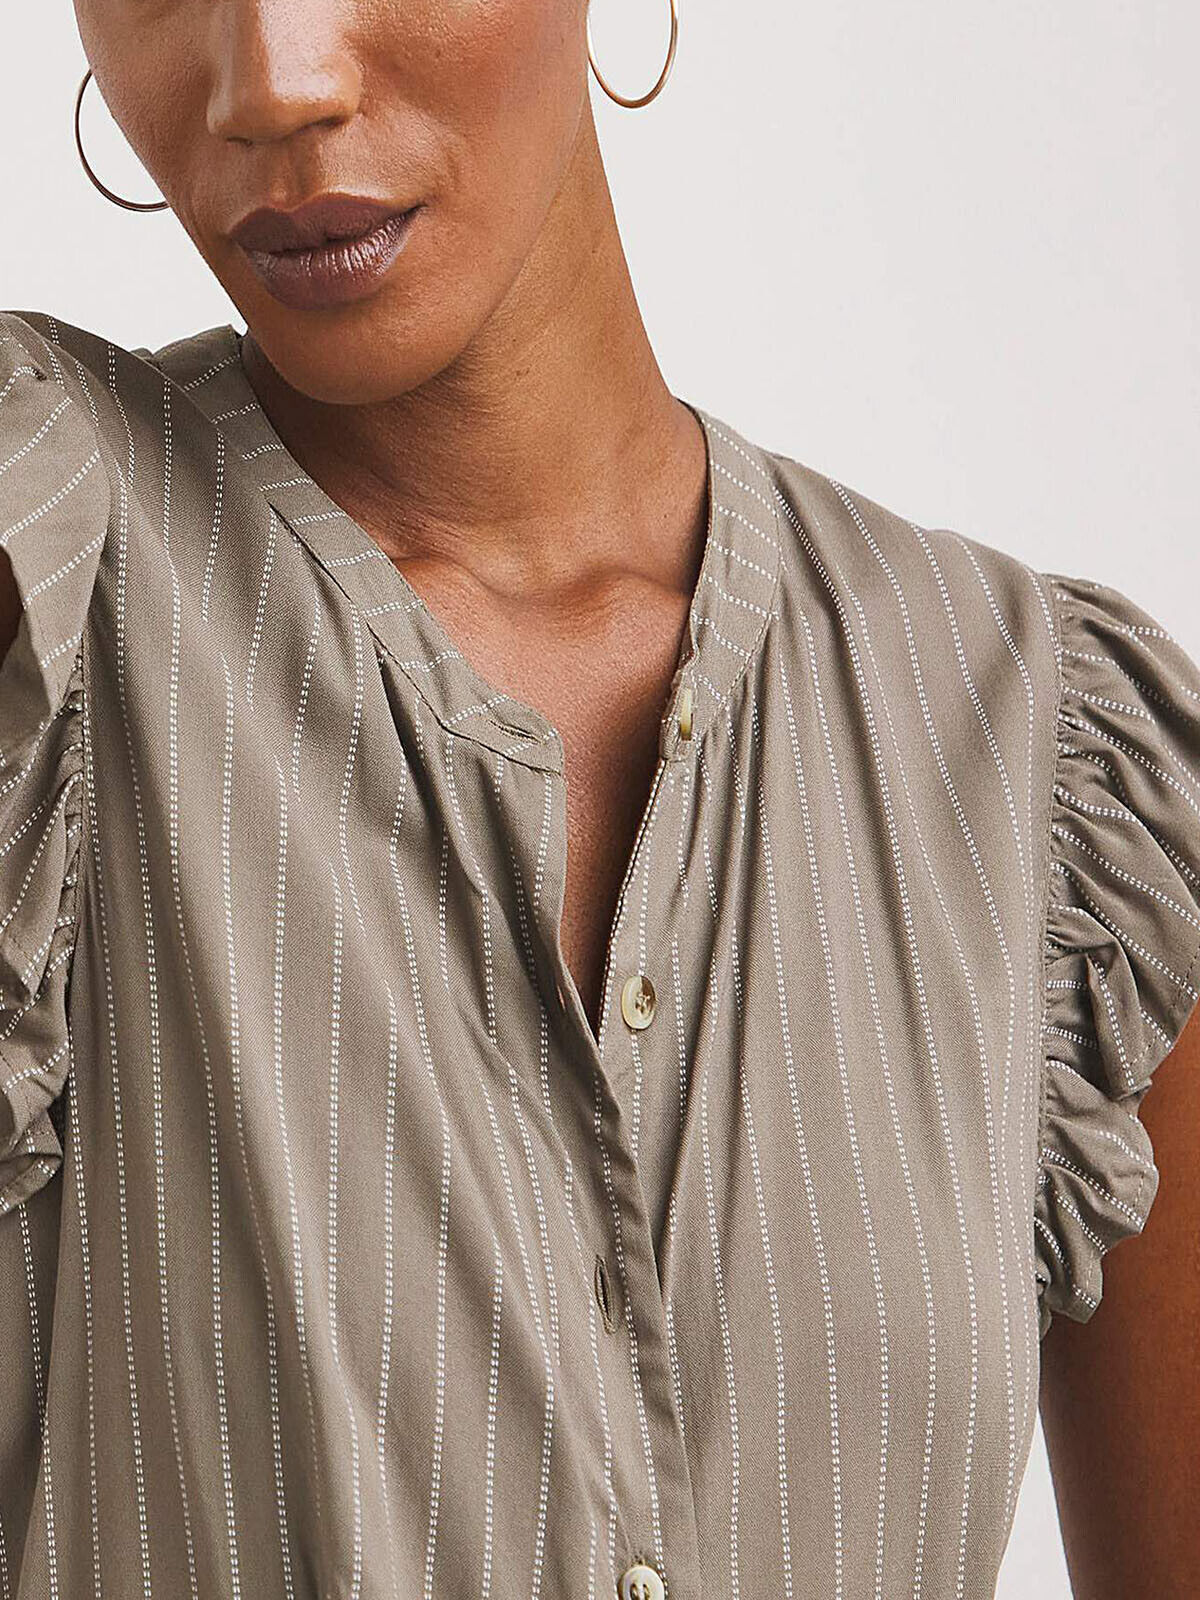 JD Williams Khaki Collarless Frill Sleeve Pocket Shirt Dress 12, 16, 20, 26, 32